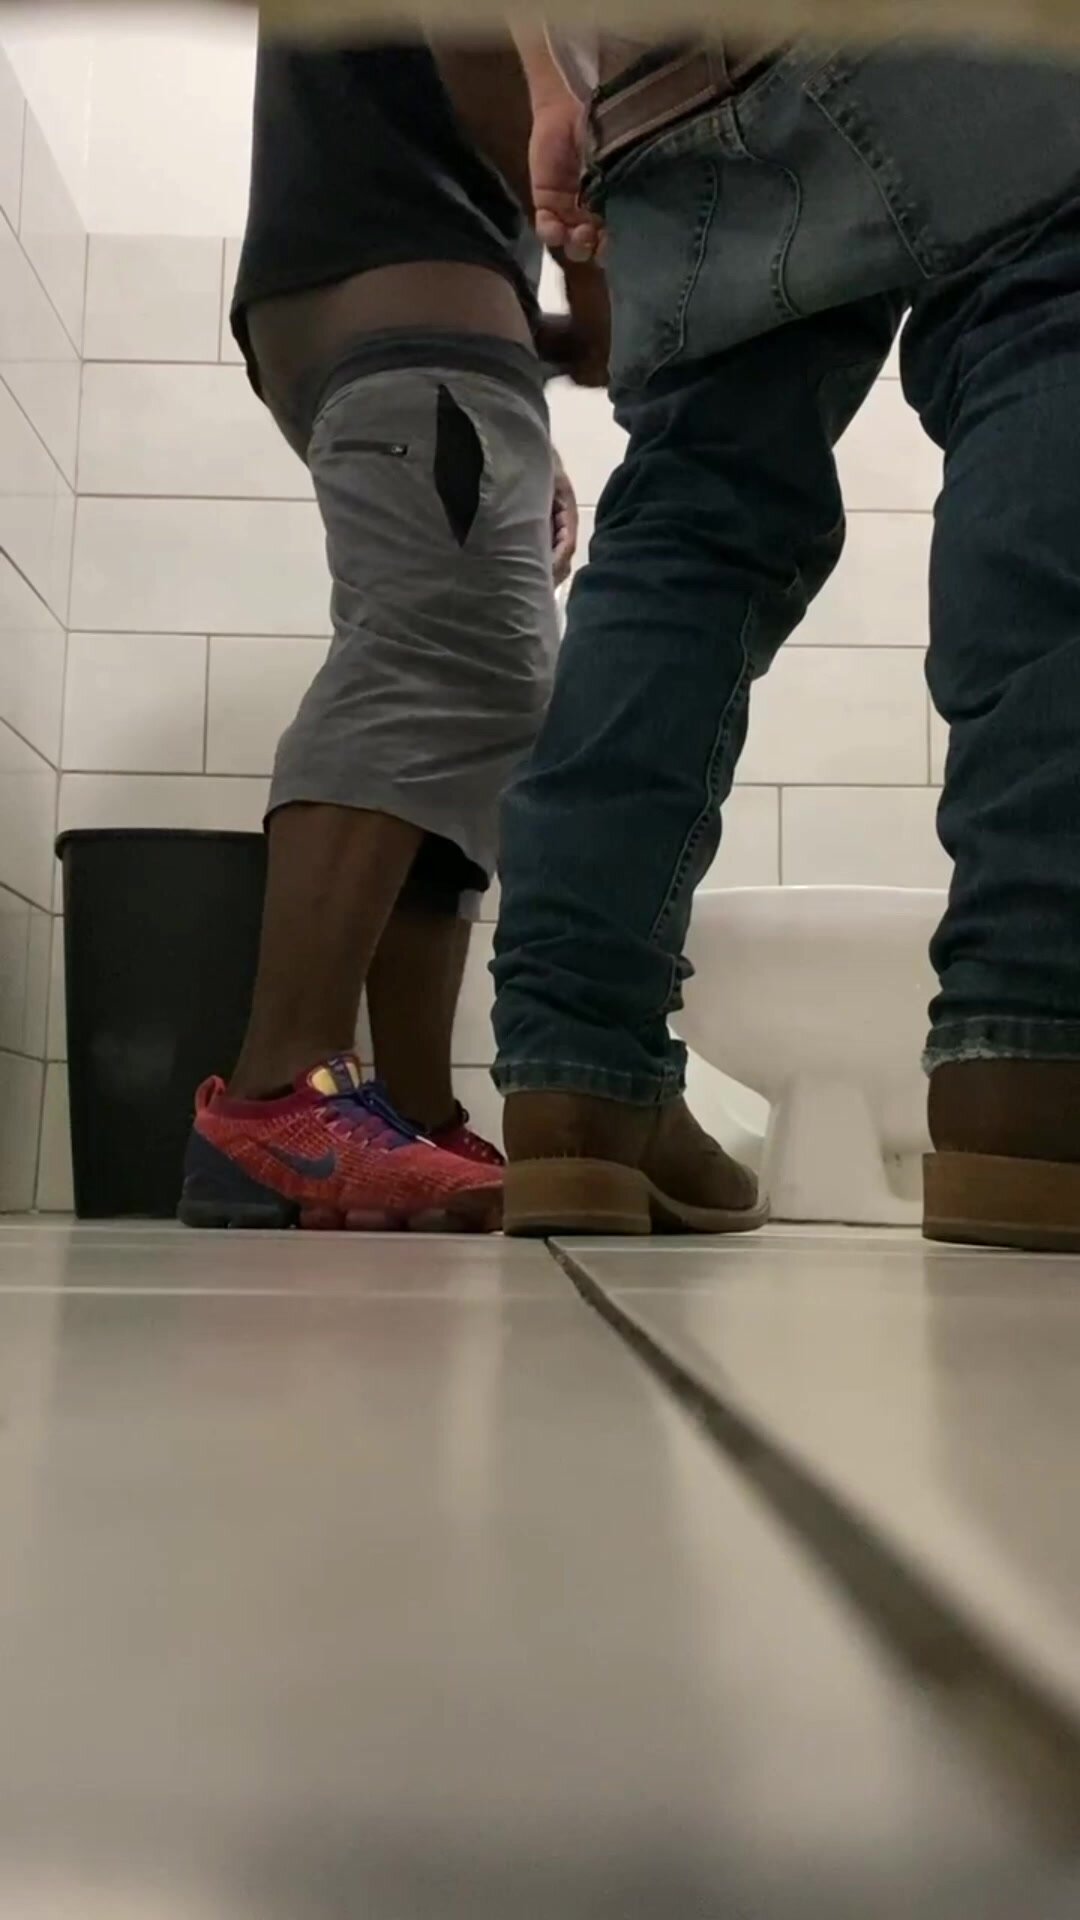 Caught two guys having fun in stall